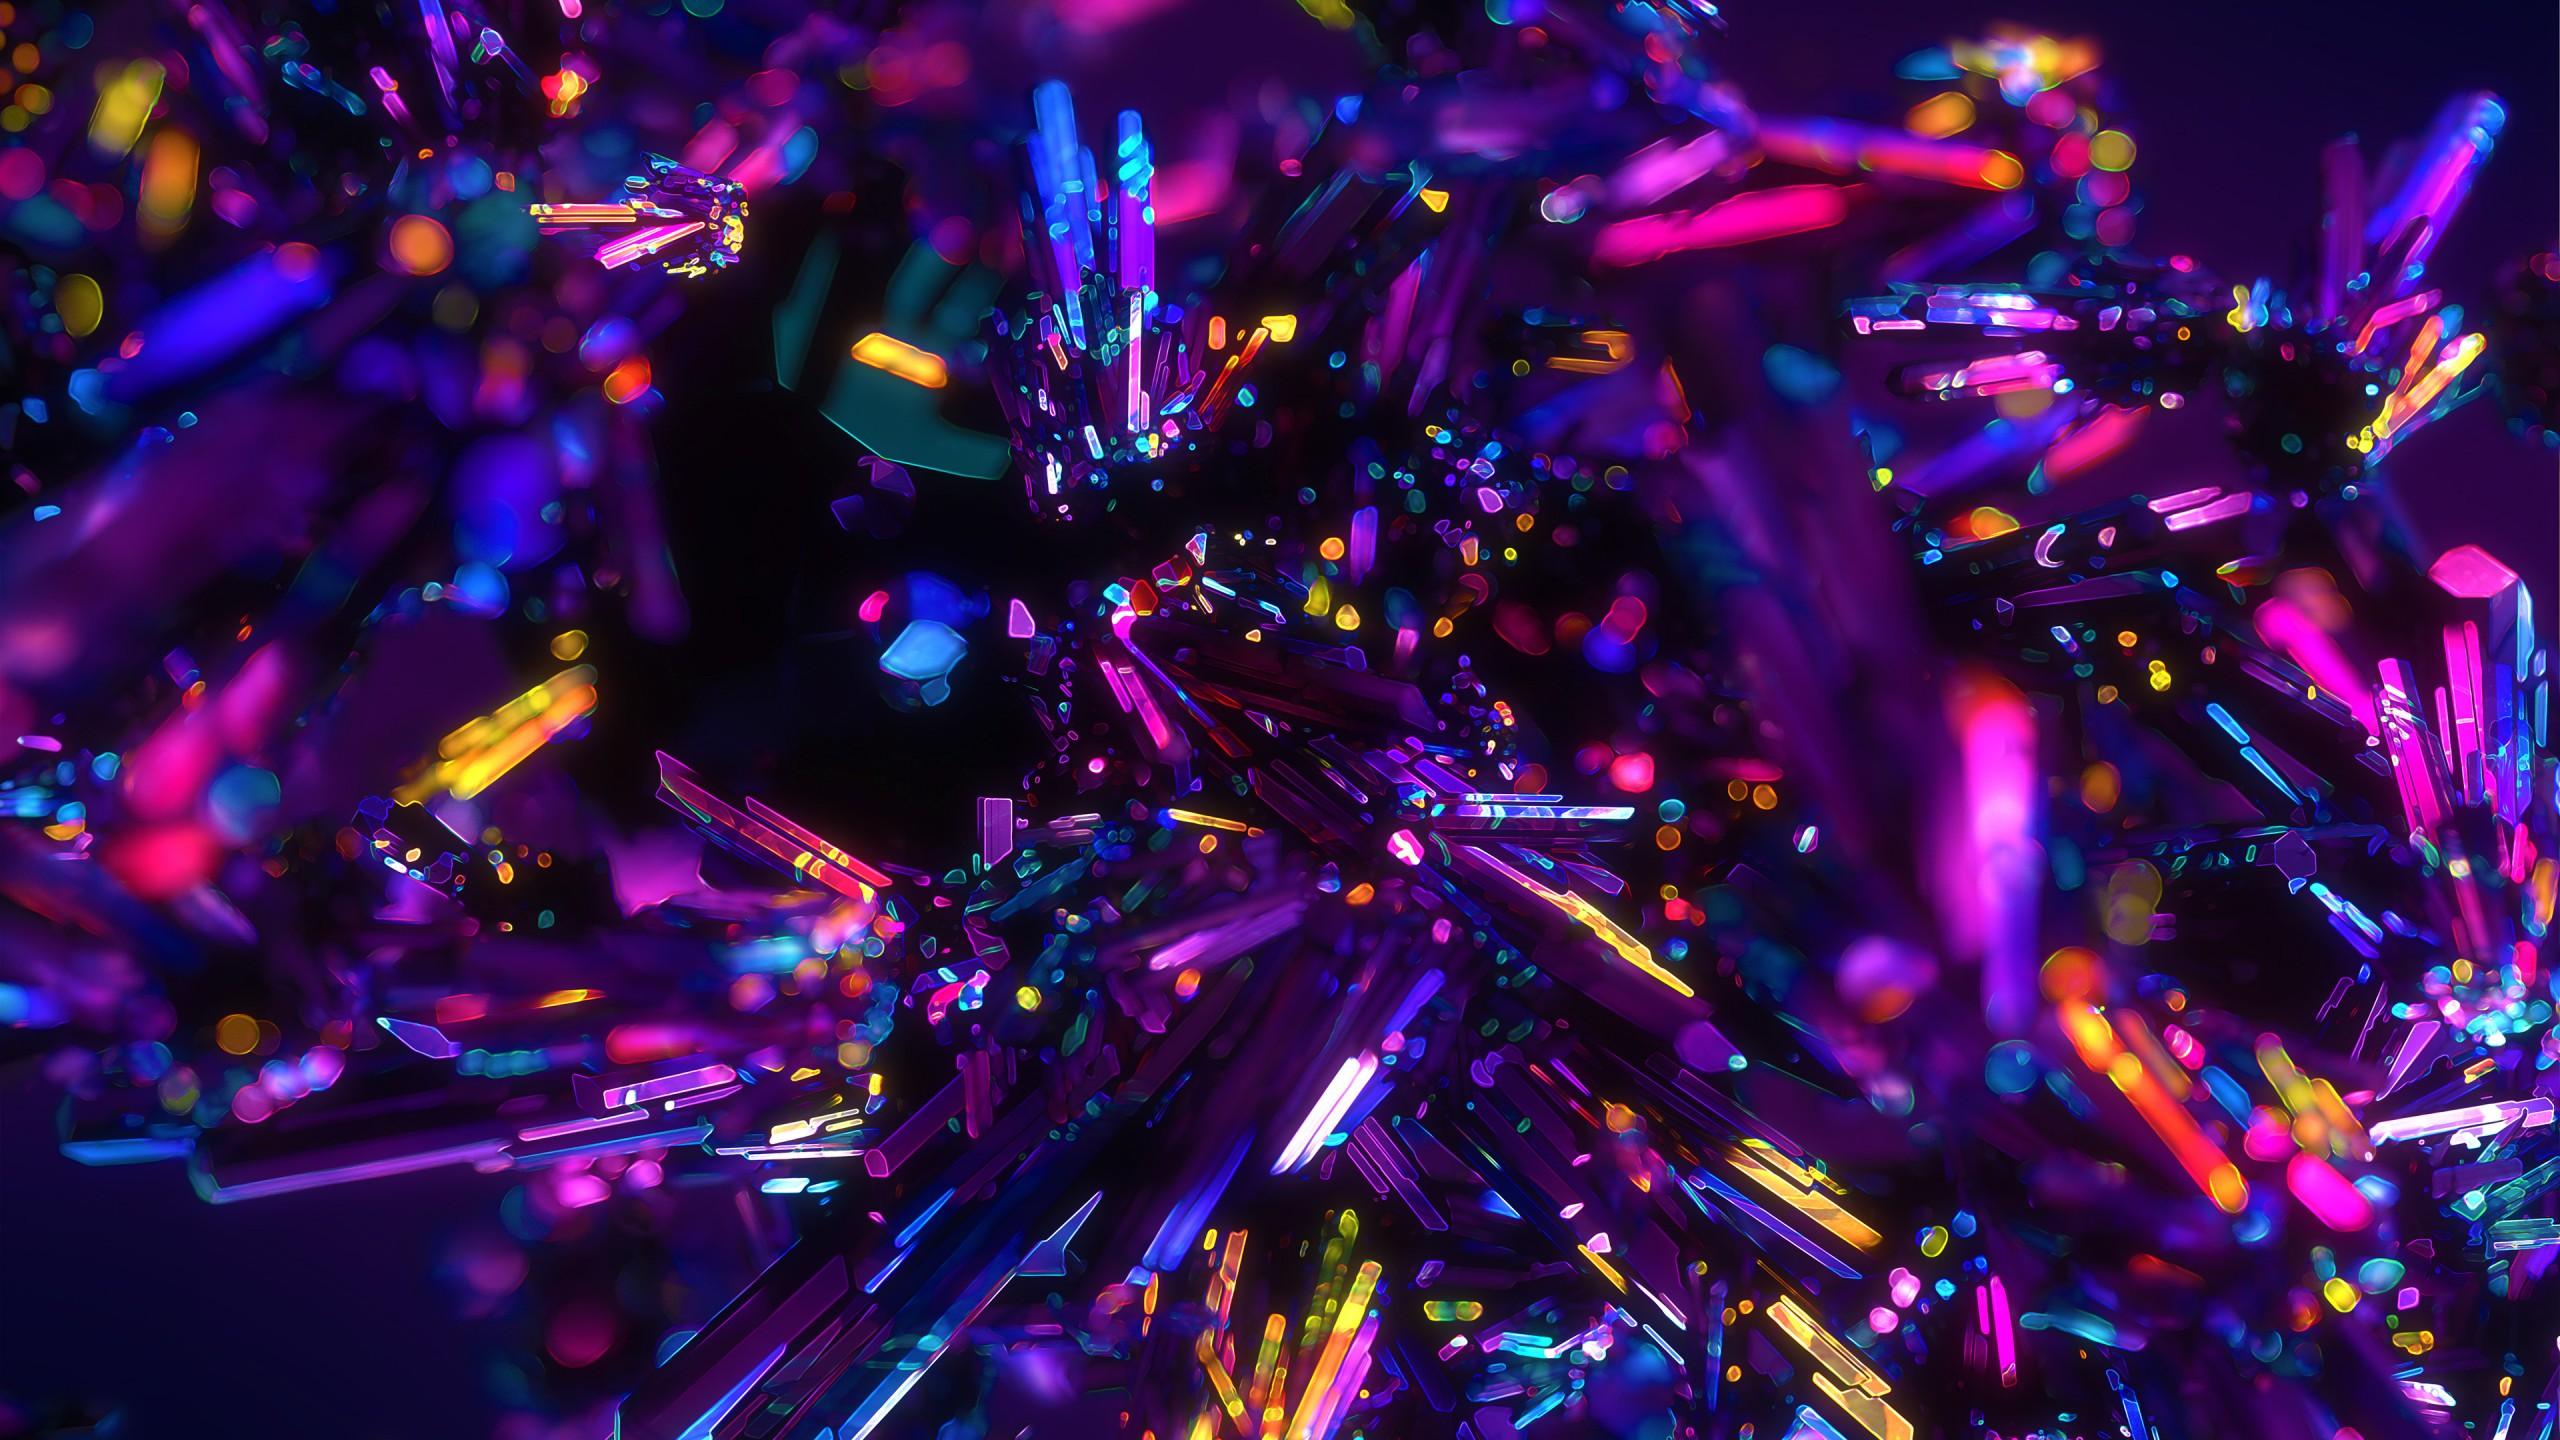 Wallpaper Crystals, Digital art, Purple, Abstract, Colorful